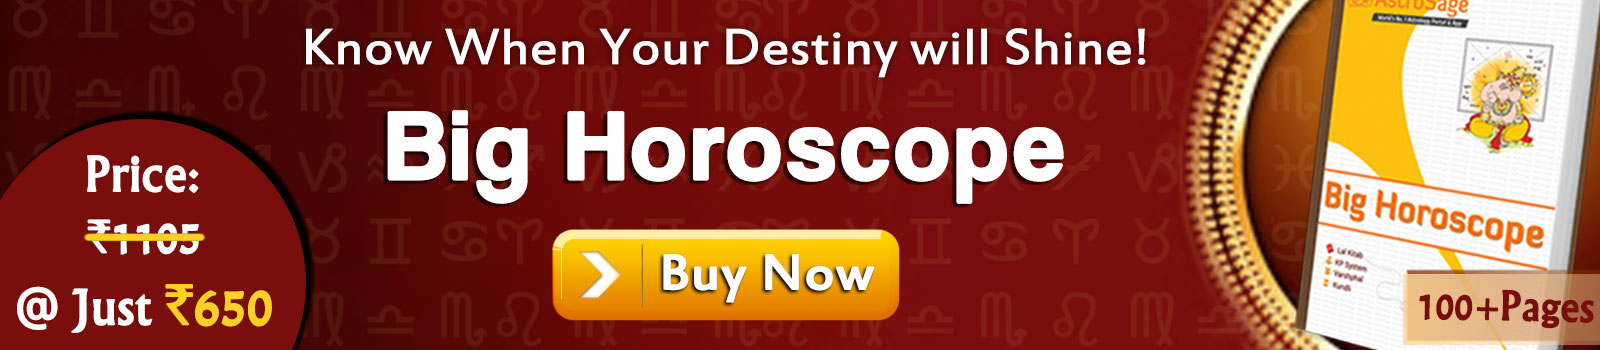 http://www.astrosage.com/offer/big-horoscope.asp?prtnr_id=BLGEN